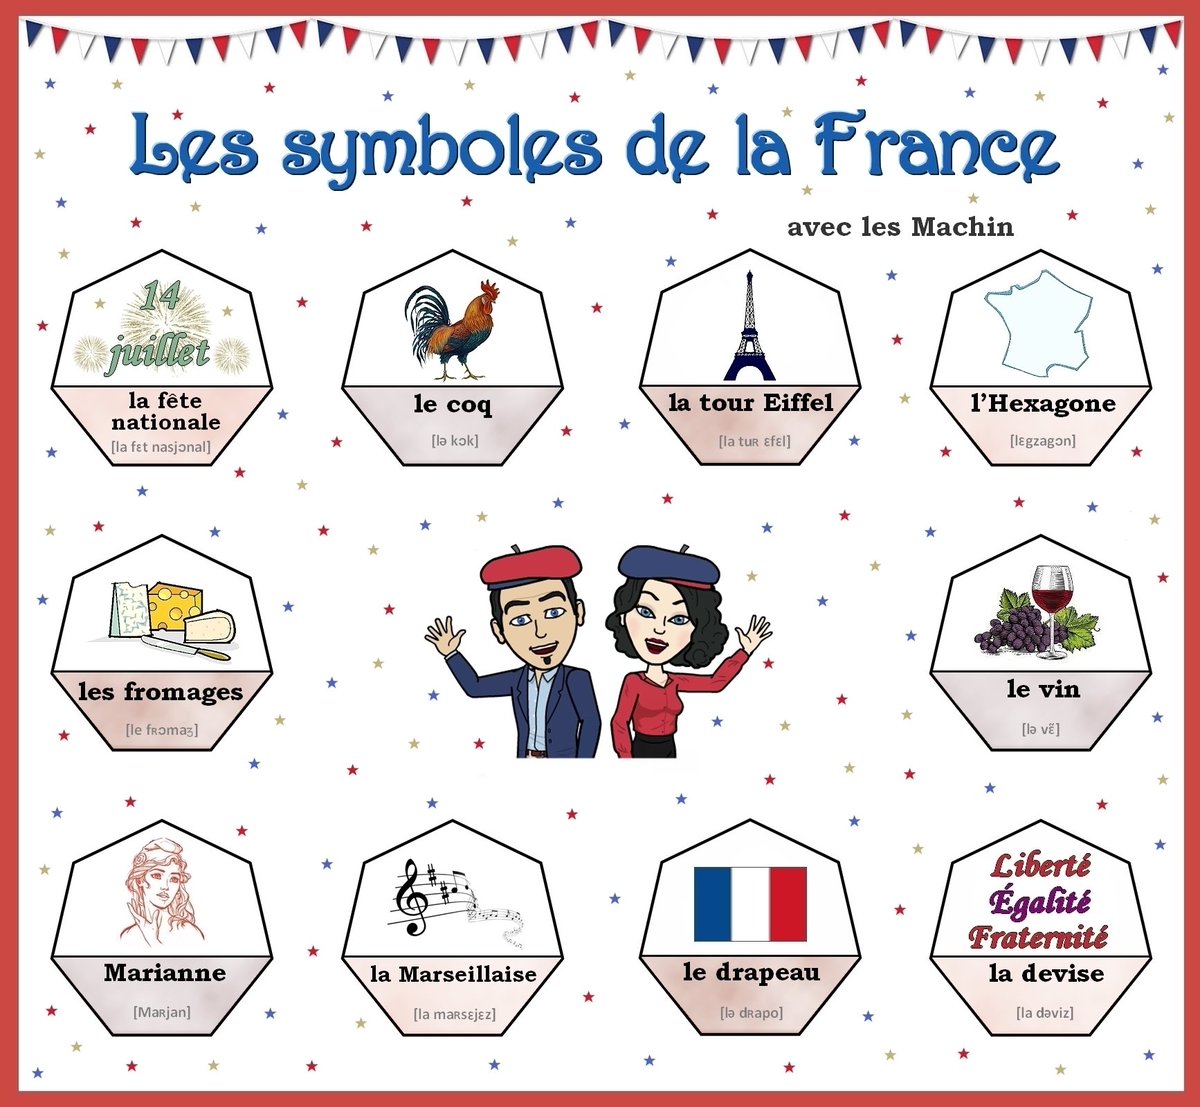 RT Les_Machin: Basic words: #FrenchSymbols! 
🇫🇷🇫🇷🇫🇷 
#FrenchNationalDay #14juillet 
#FLE #AllezLesBleus #BastilleDay
#fêtenationale #14Juillet2018